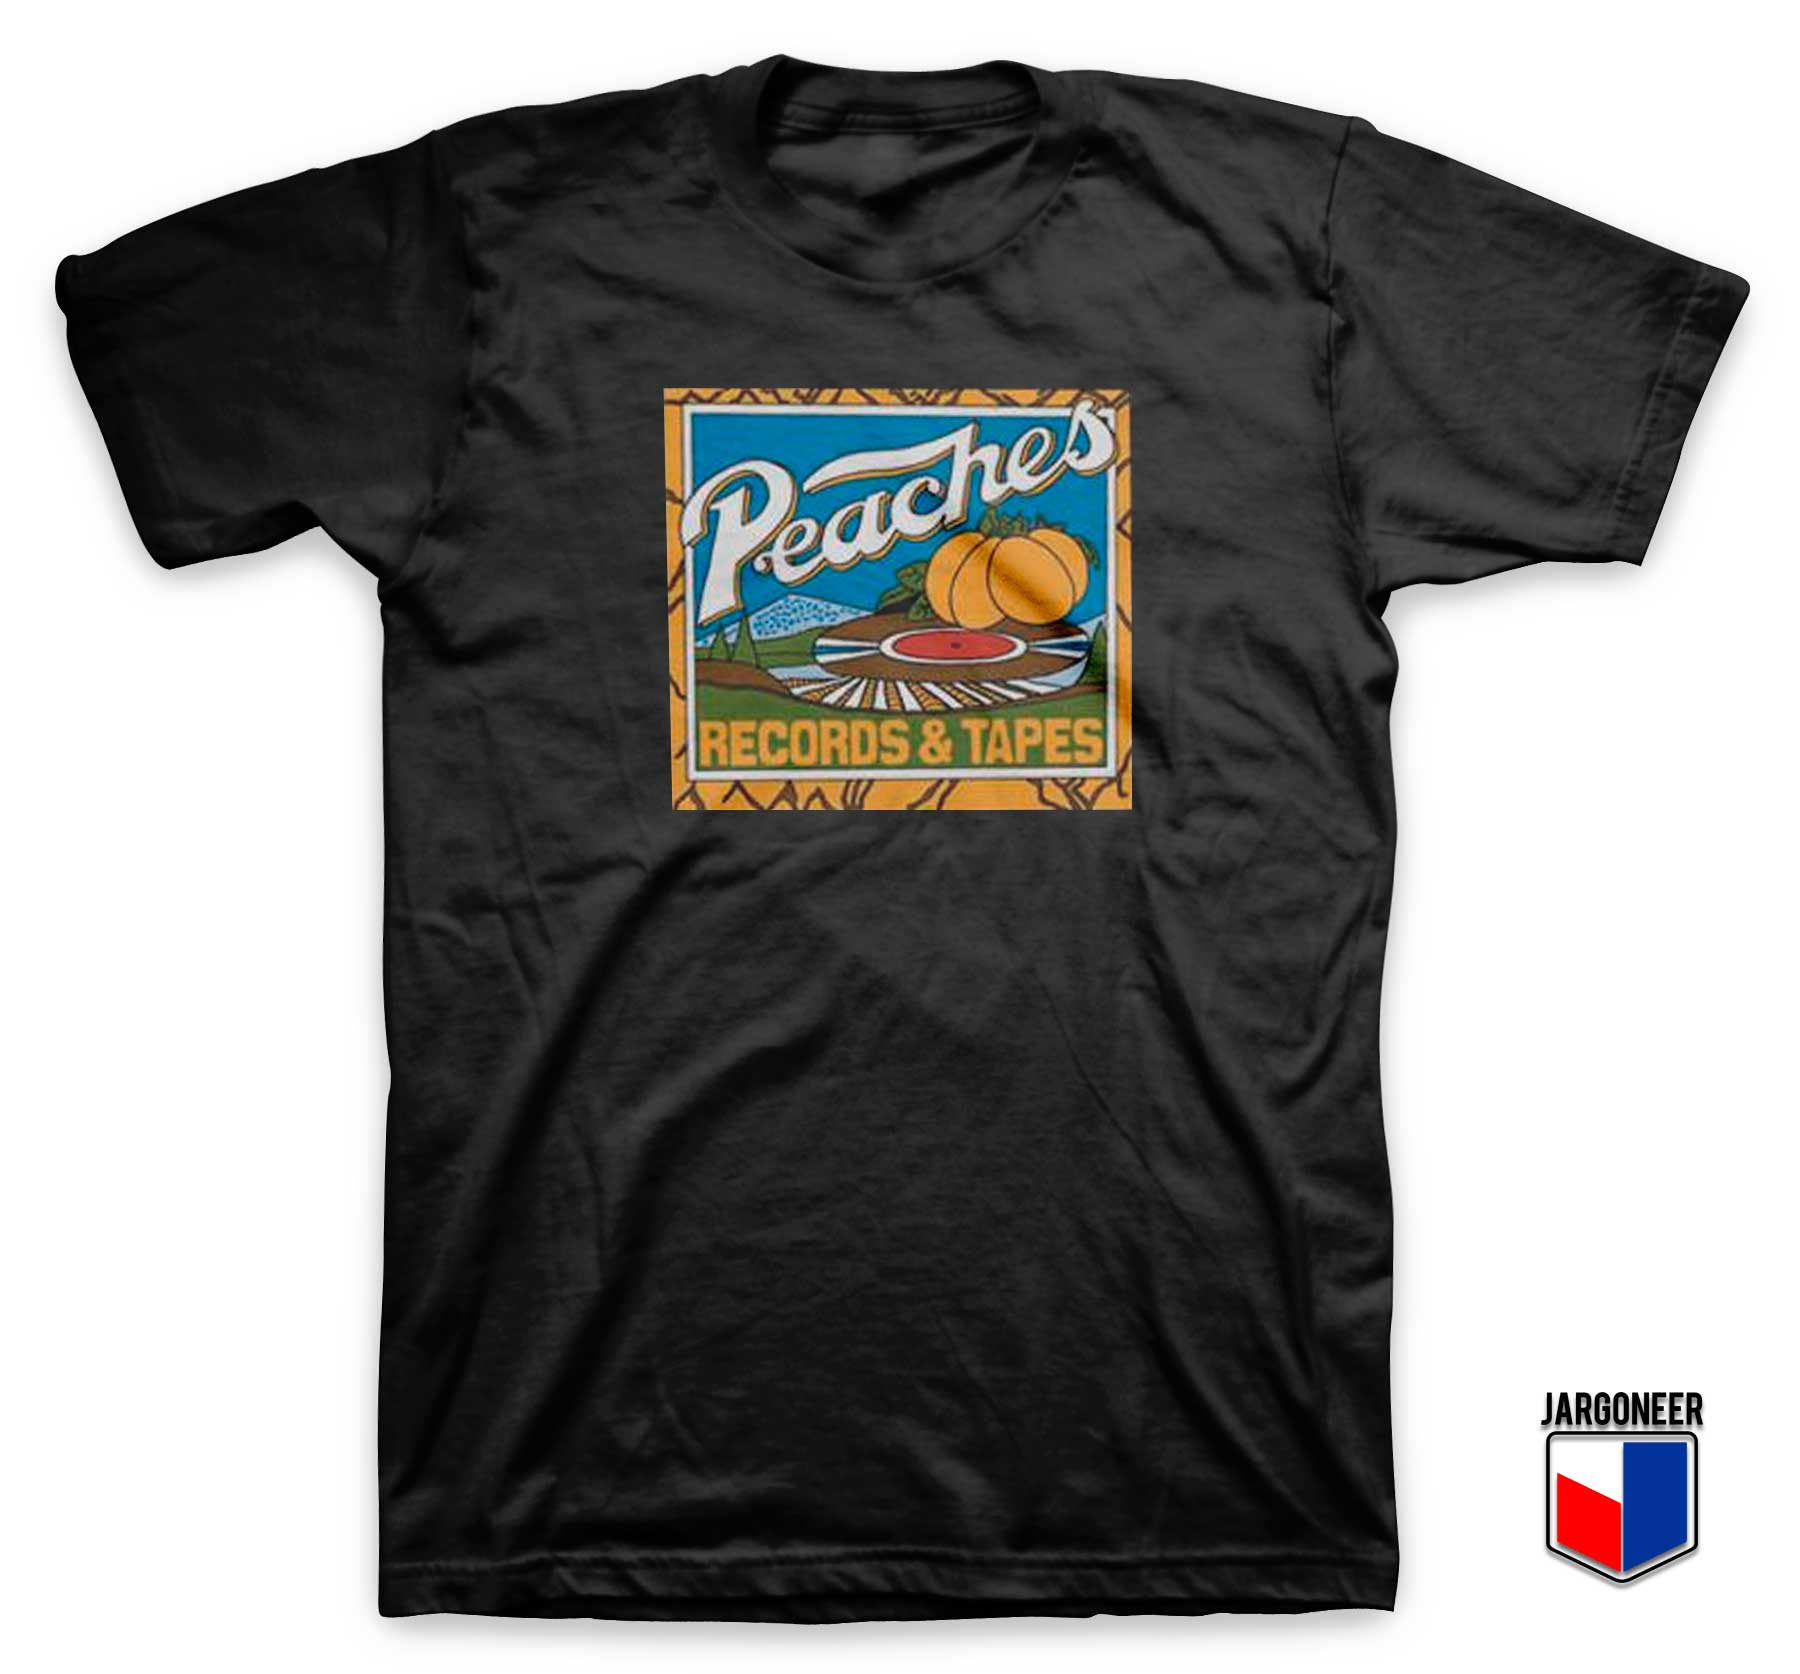 Peaches Records And Tape T Shirt - Shop Unique Graphic Cool Shirt Designs